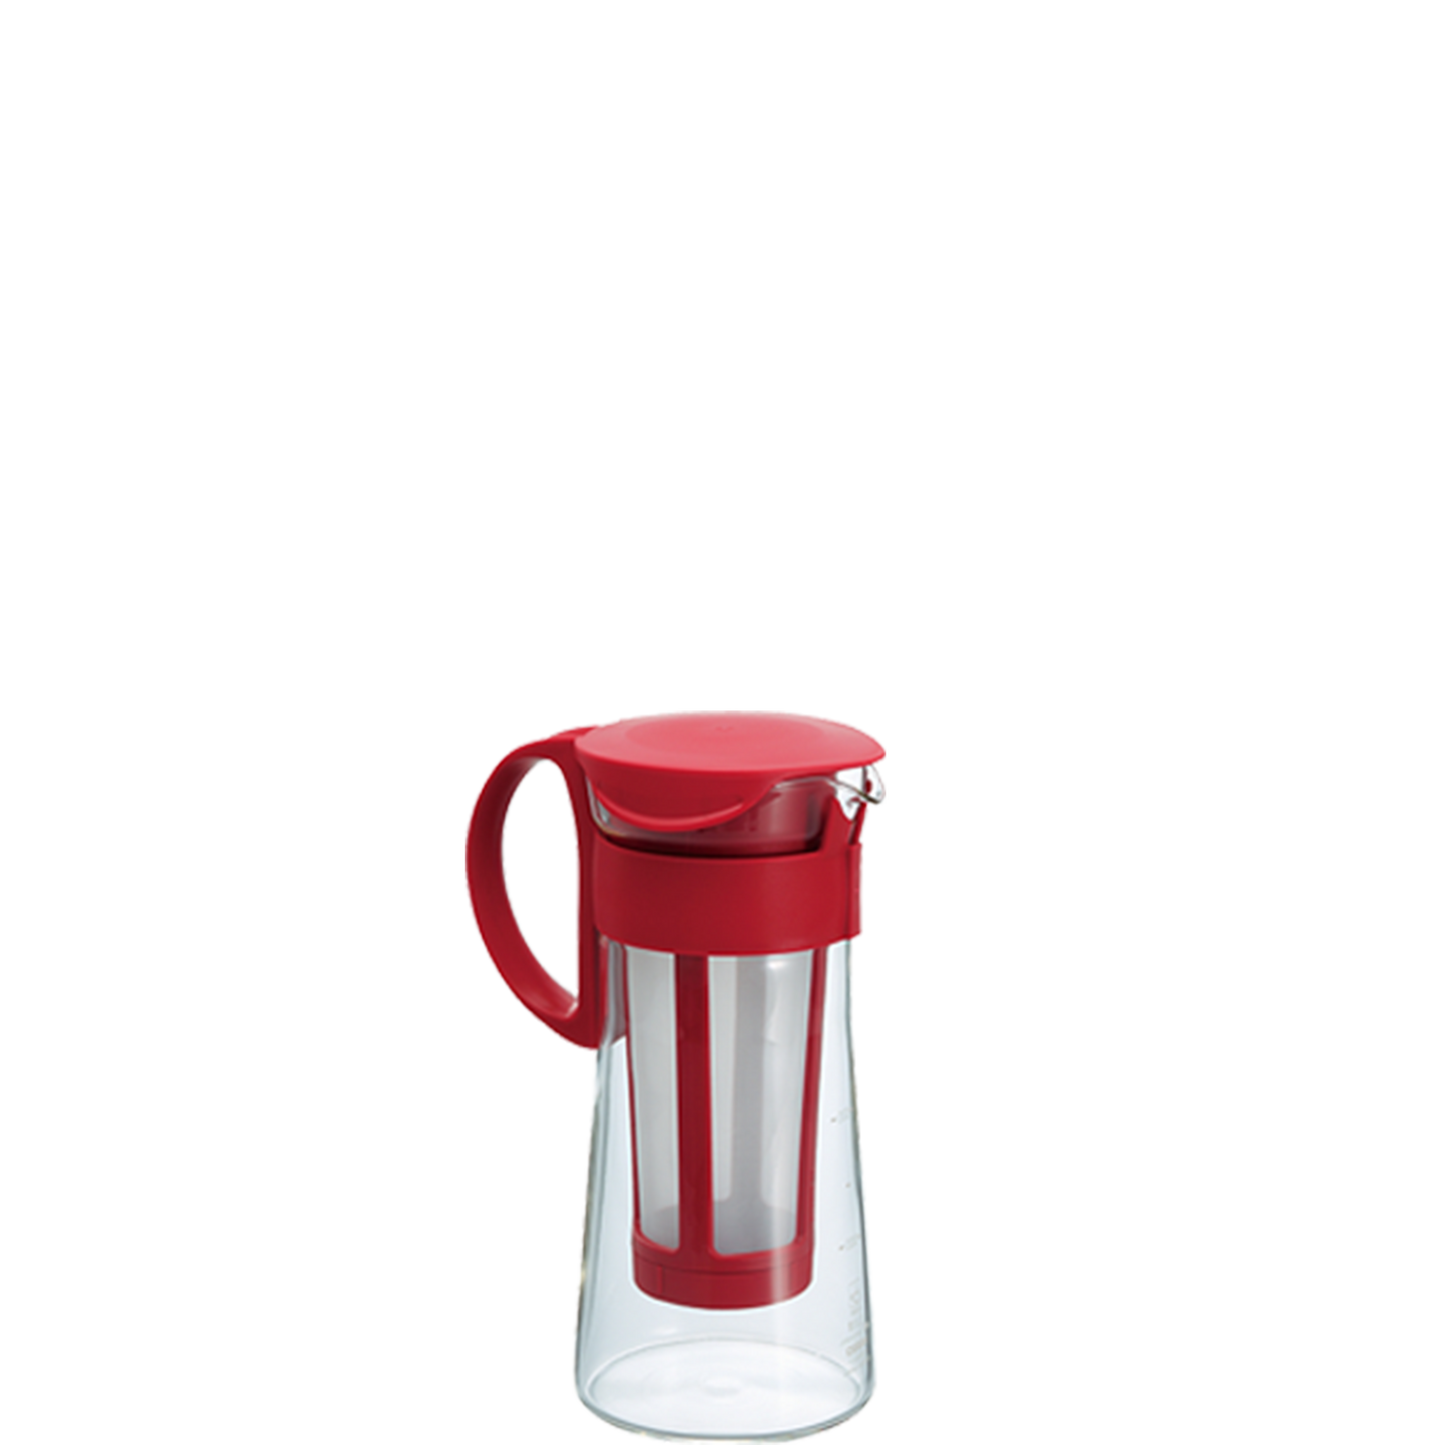 V60 MIZUDASHI Cold Brew Coffee Pot in Red